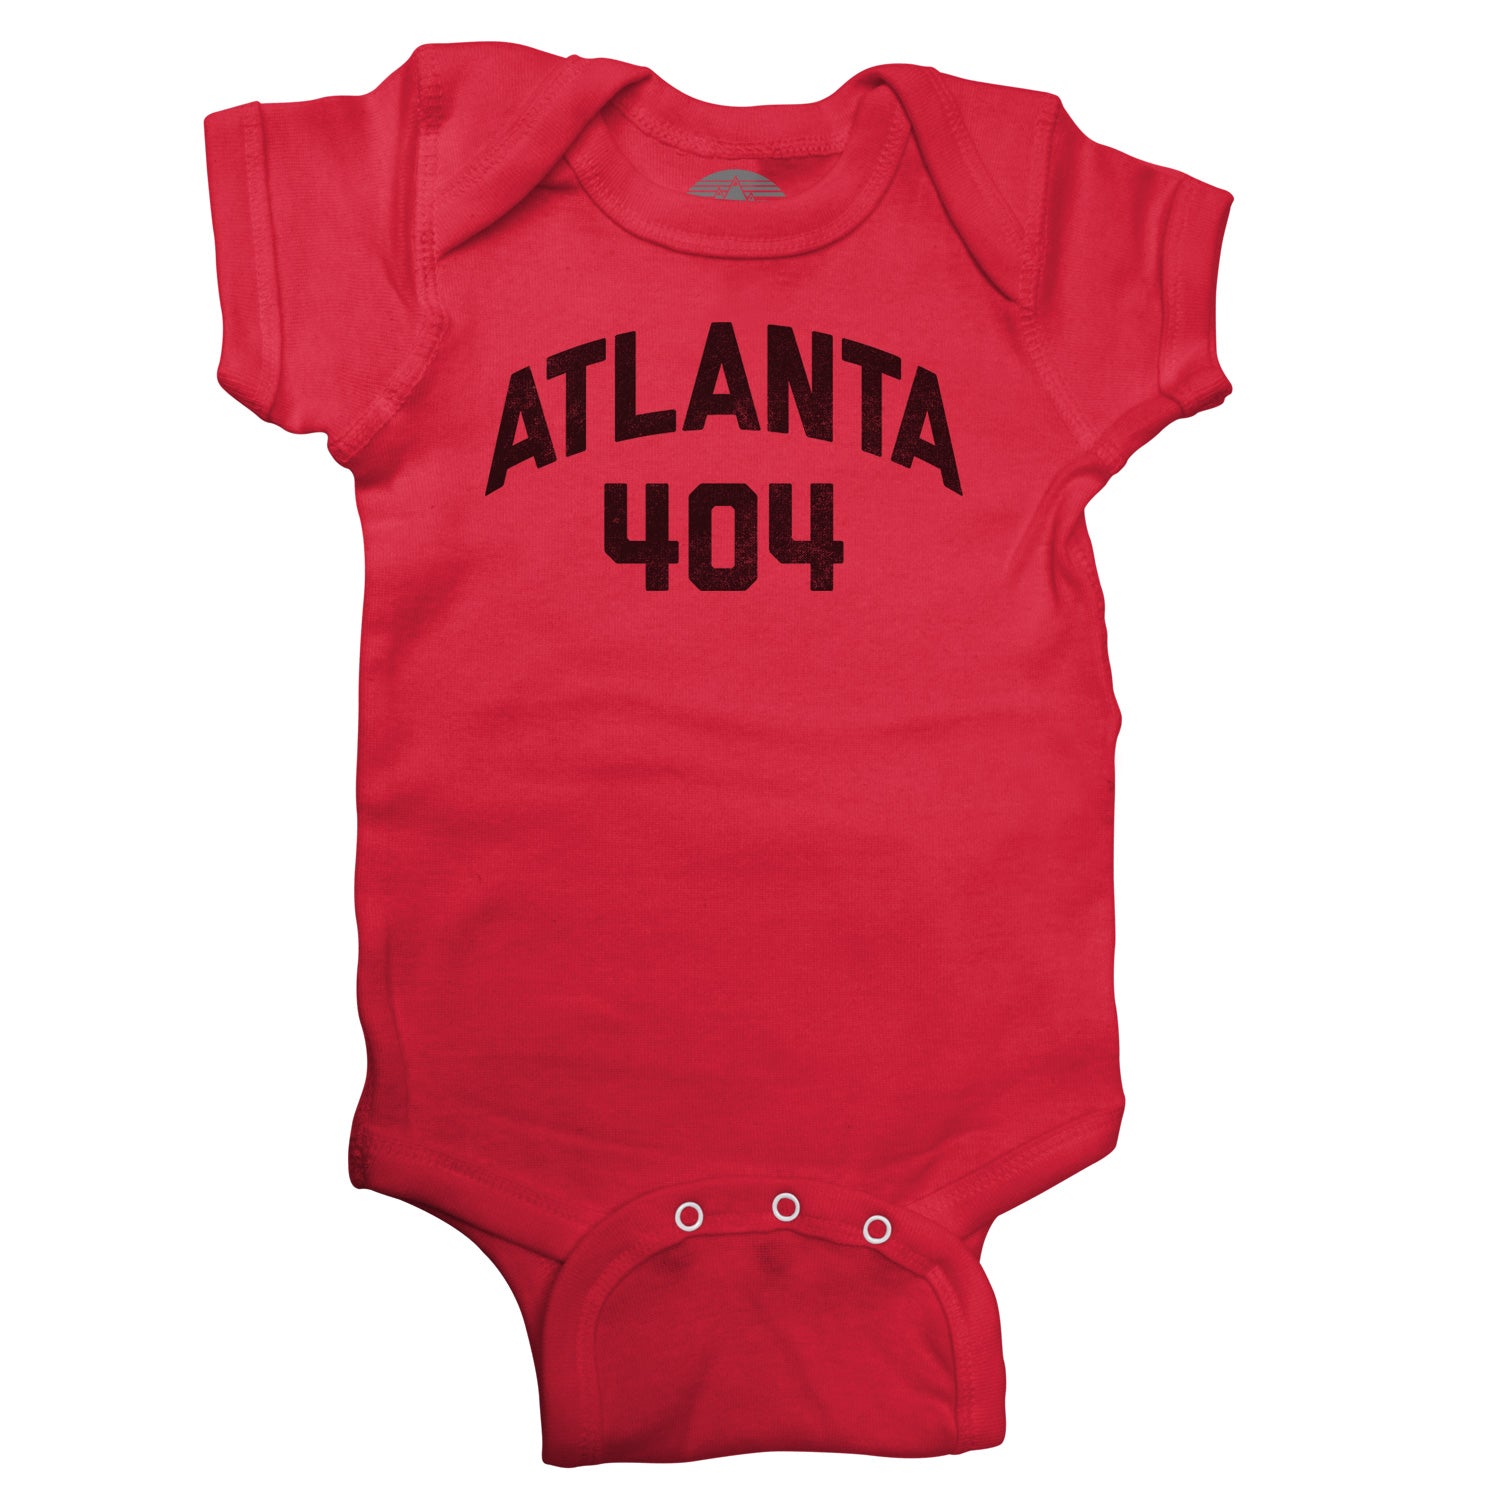 Atlanta 404 Area Code Infant Bodysuit - Unisex Fit